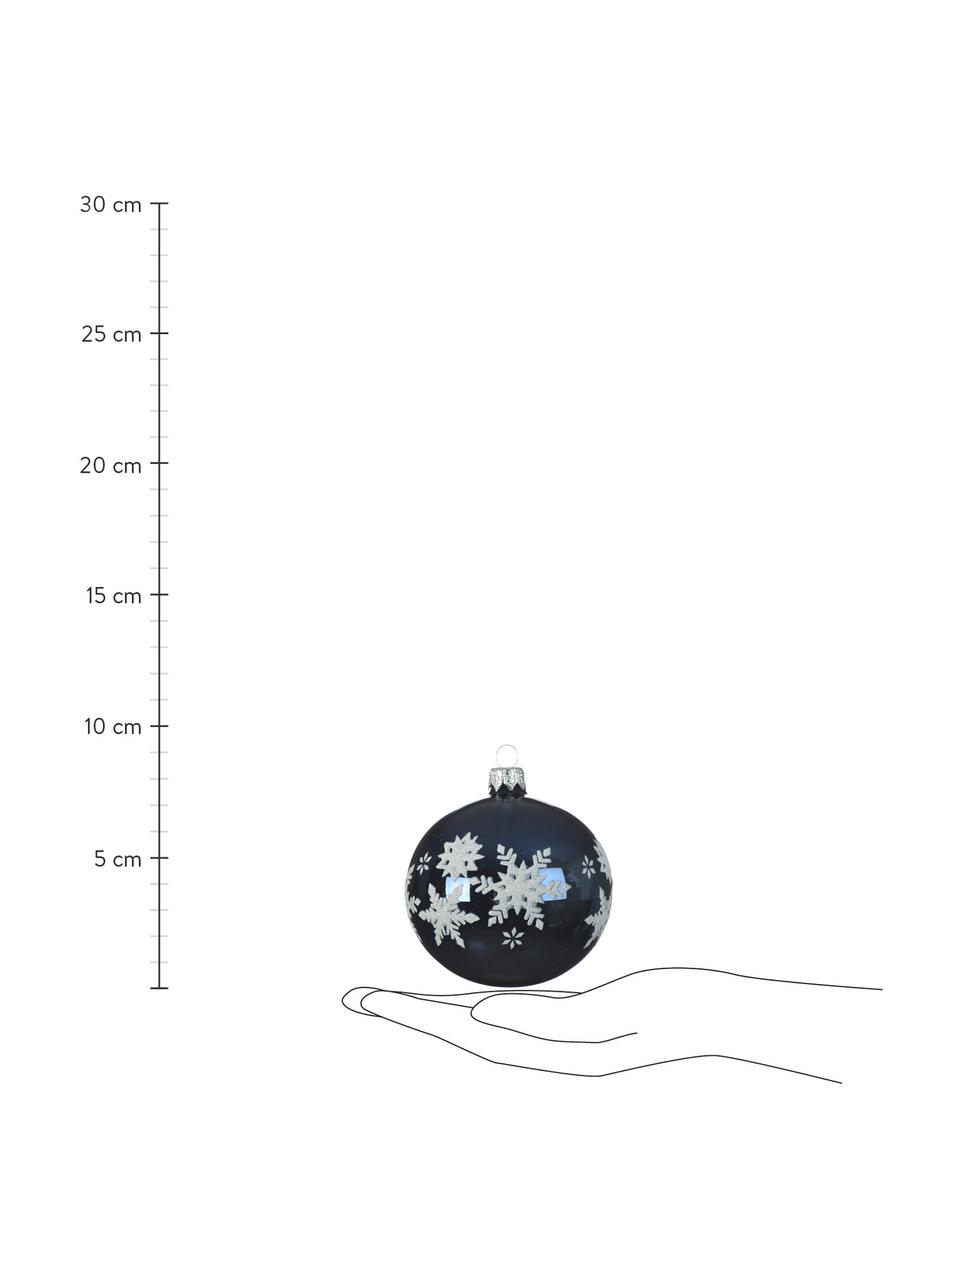 Set de bolas de Navidad sopladas artesanalmente Snowflake, Ø 8 cm, 6 uds., Vidrio, Tonos azules, blanco, plateado, Ø 8 x Al 8 cm